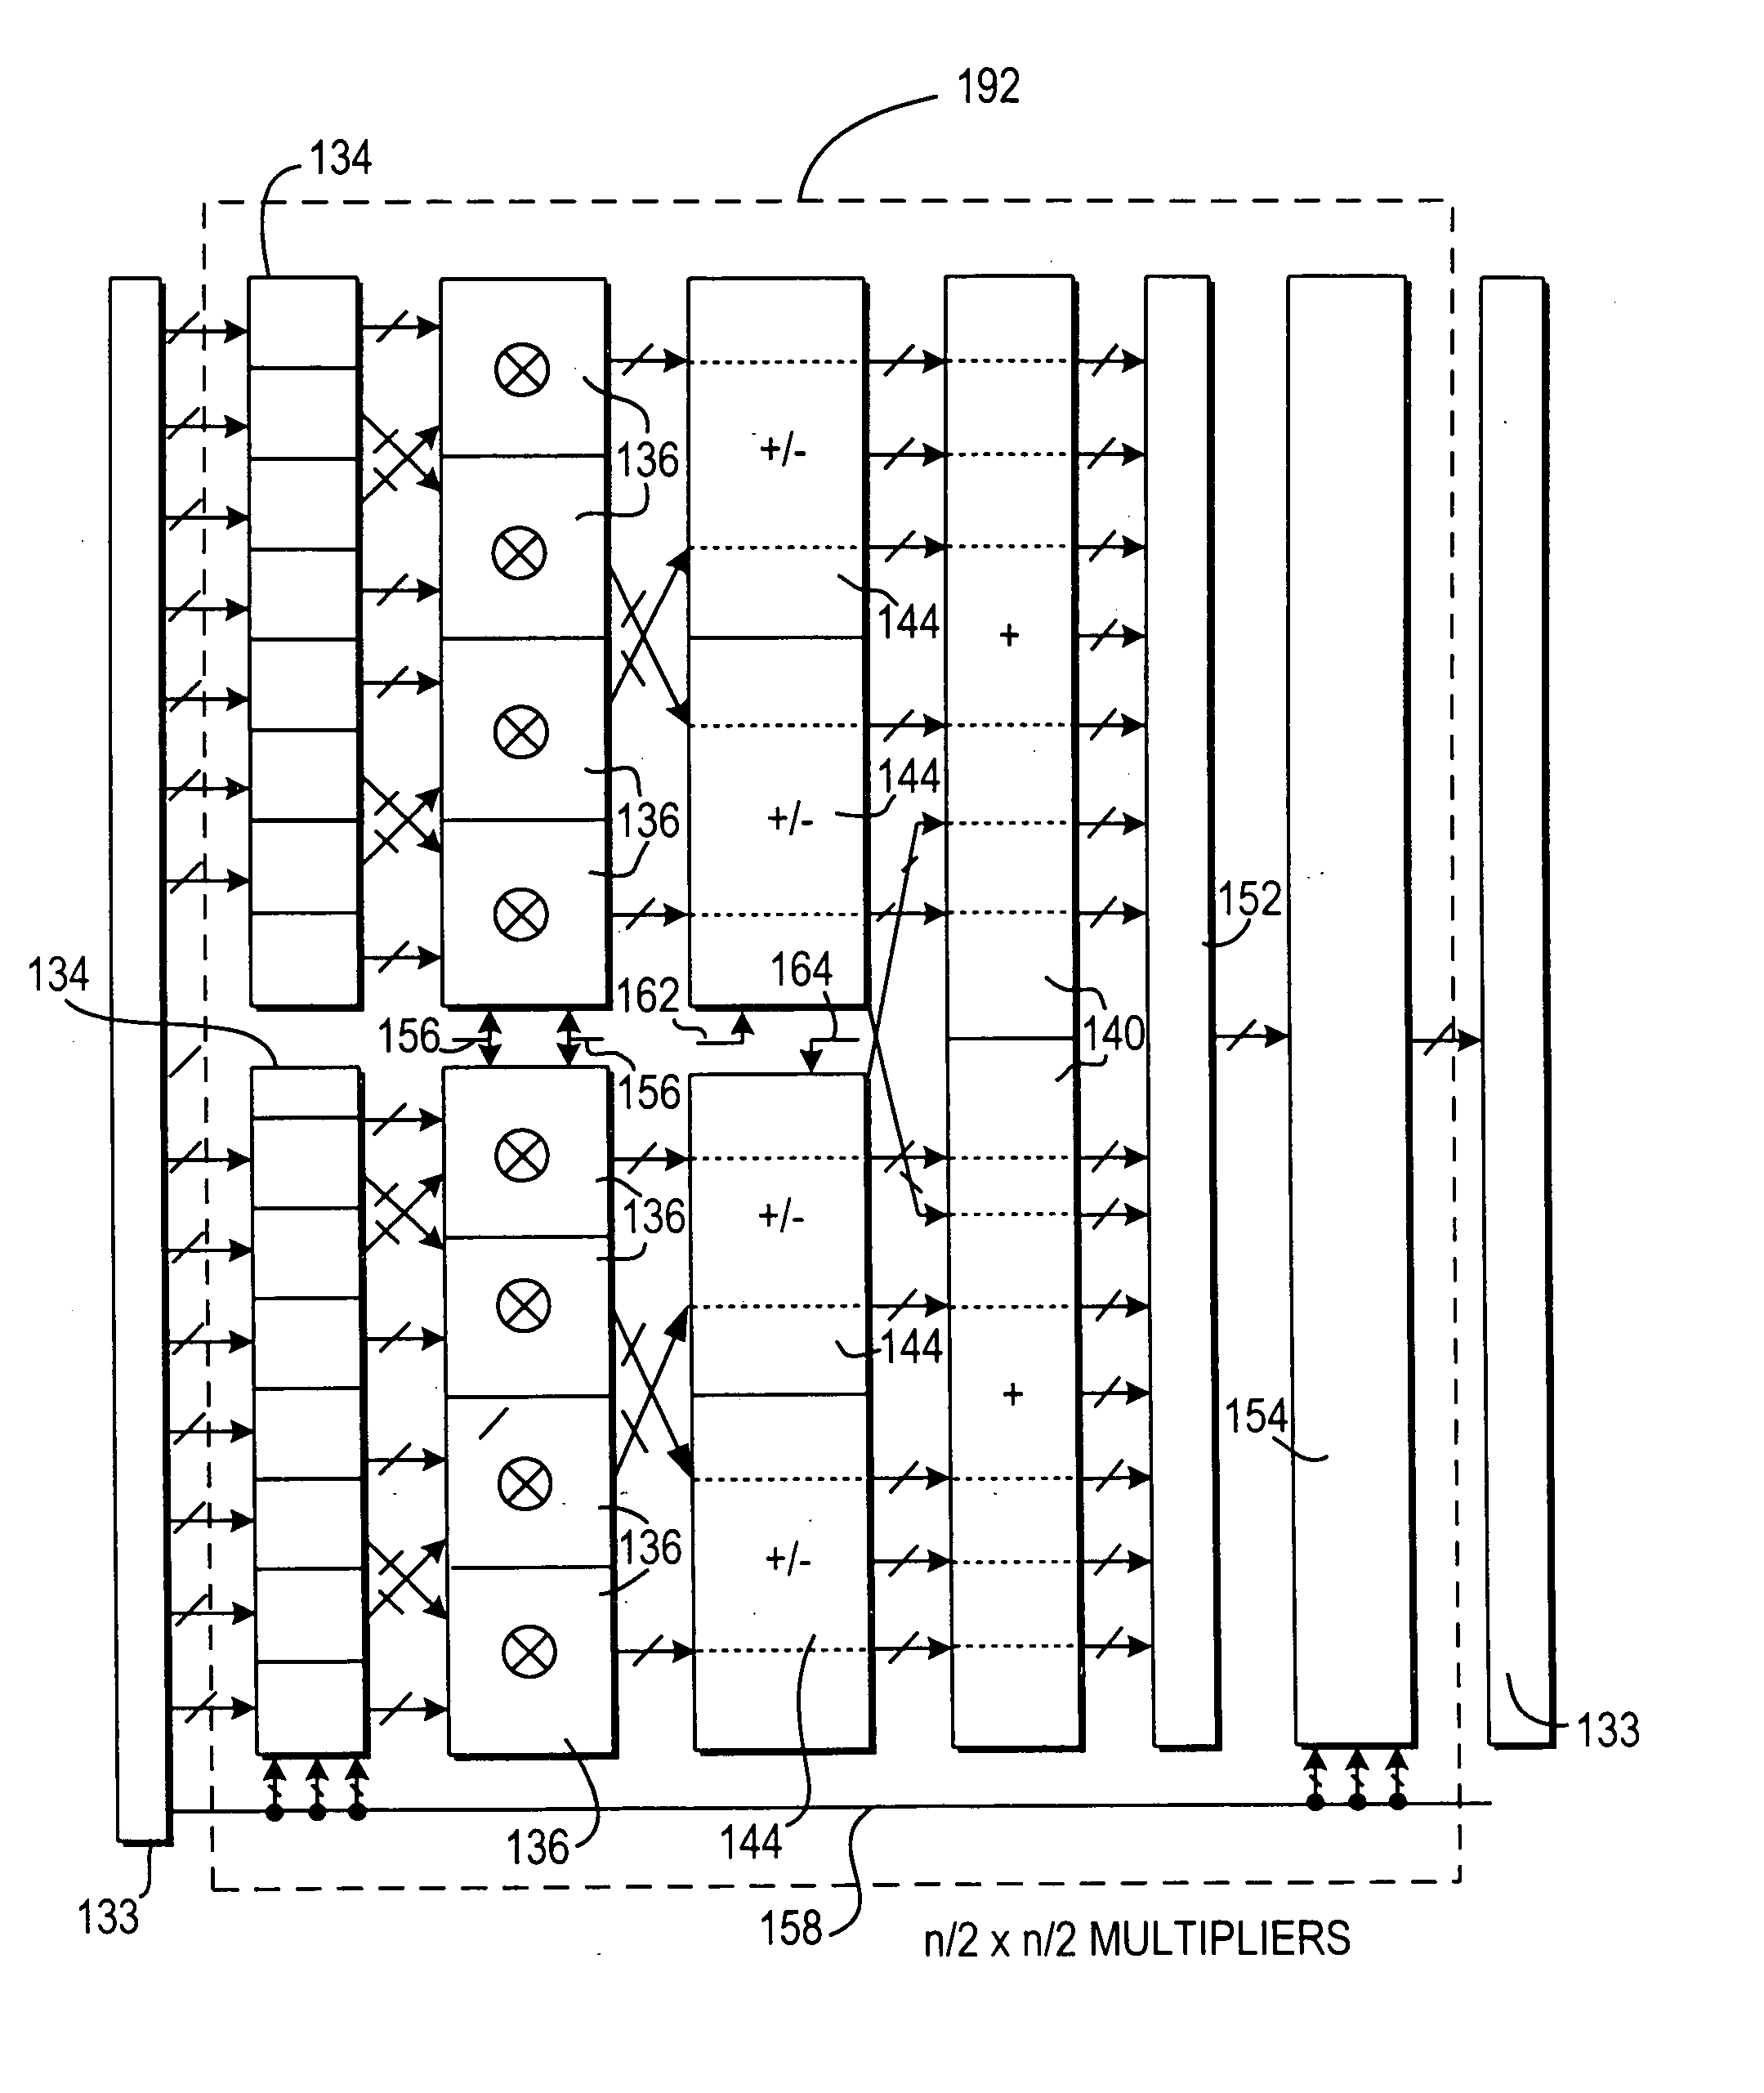 Multiplier-accumulator block mode splitting